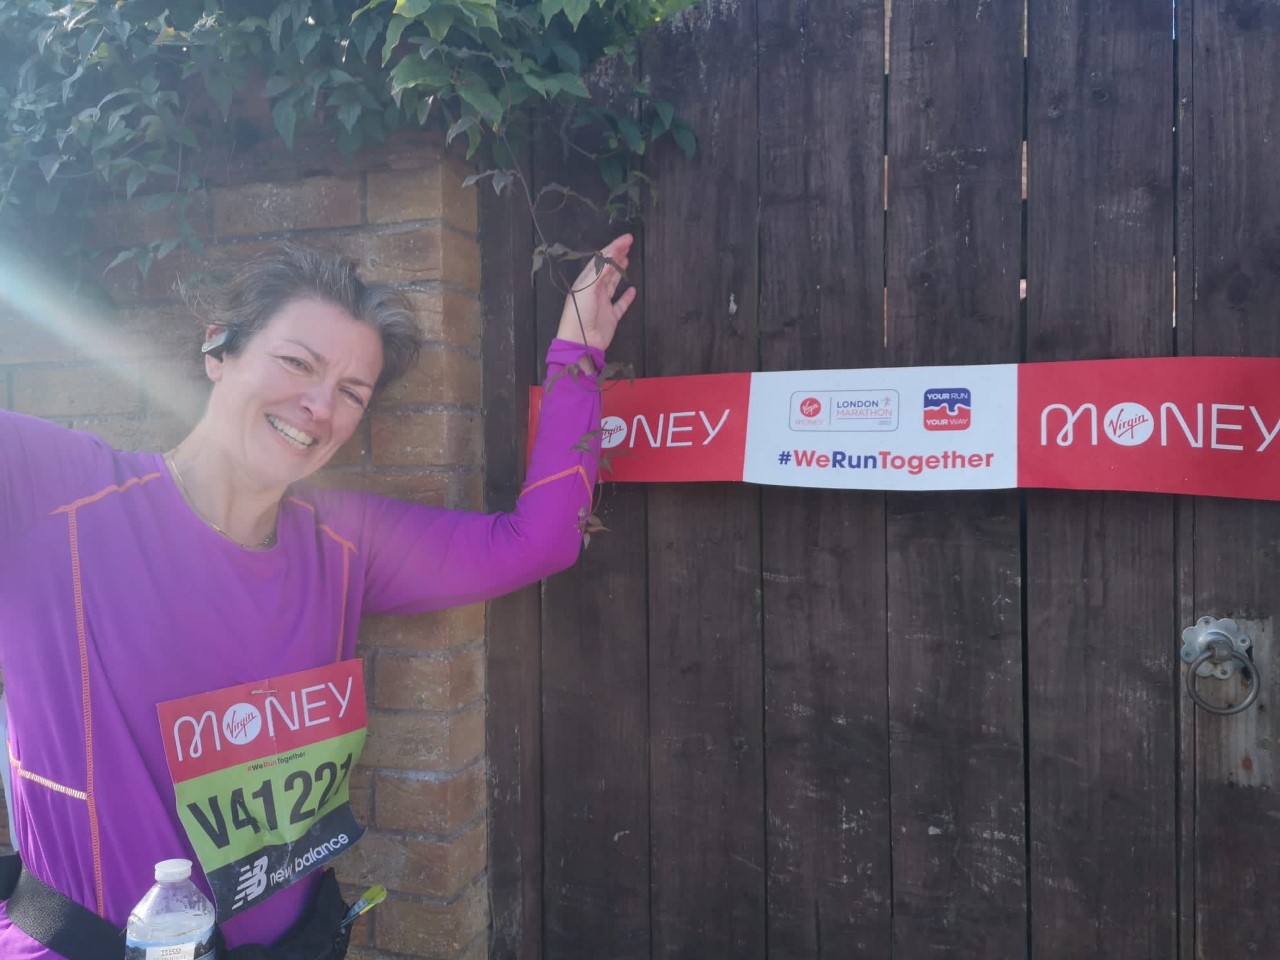 Finishing the Virtual London Marathon Dr Belinda Allen